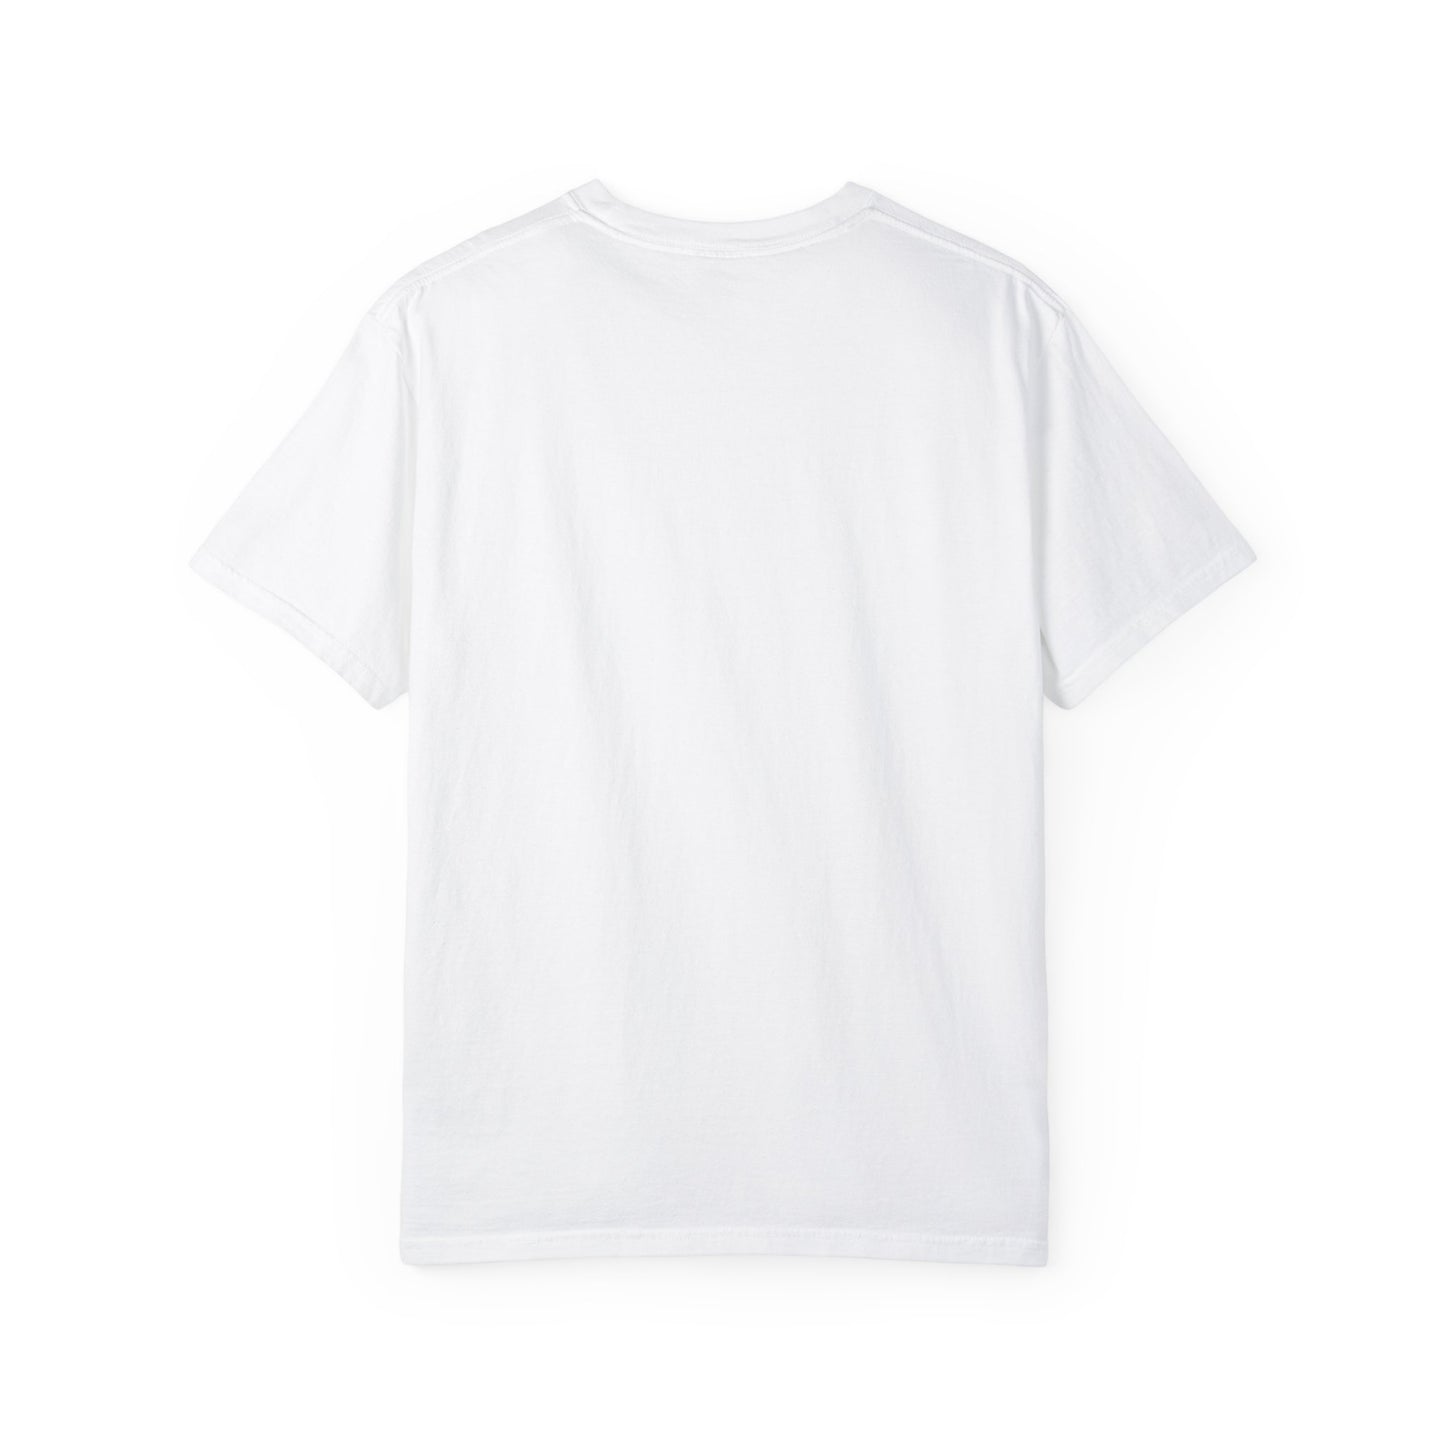 "It Girl Collection" Soft Girl Era T-shirt - White